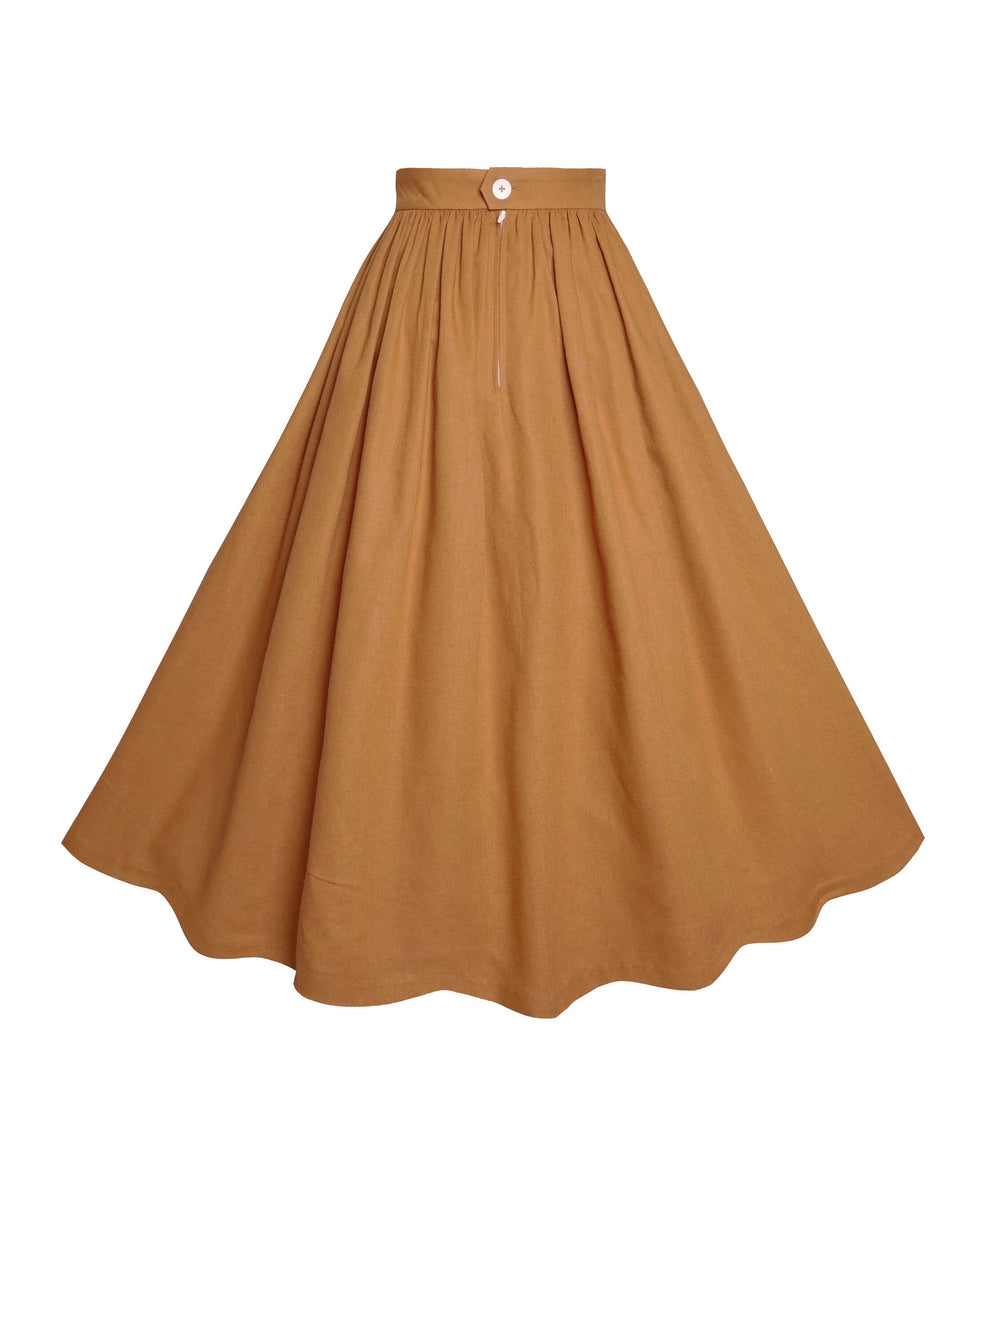 MTO - Lola Skirt in Caramel Linen